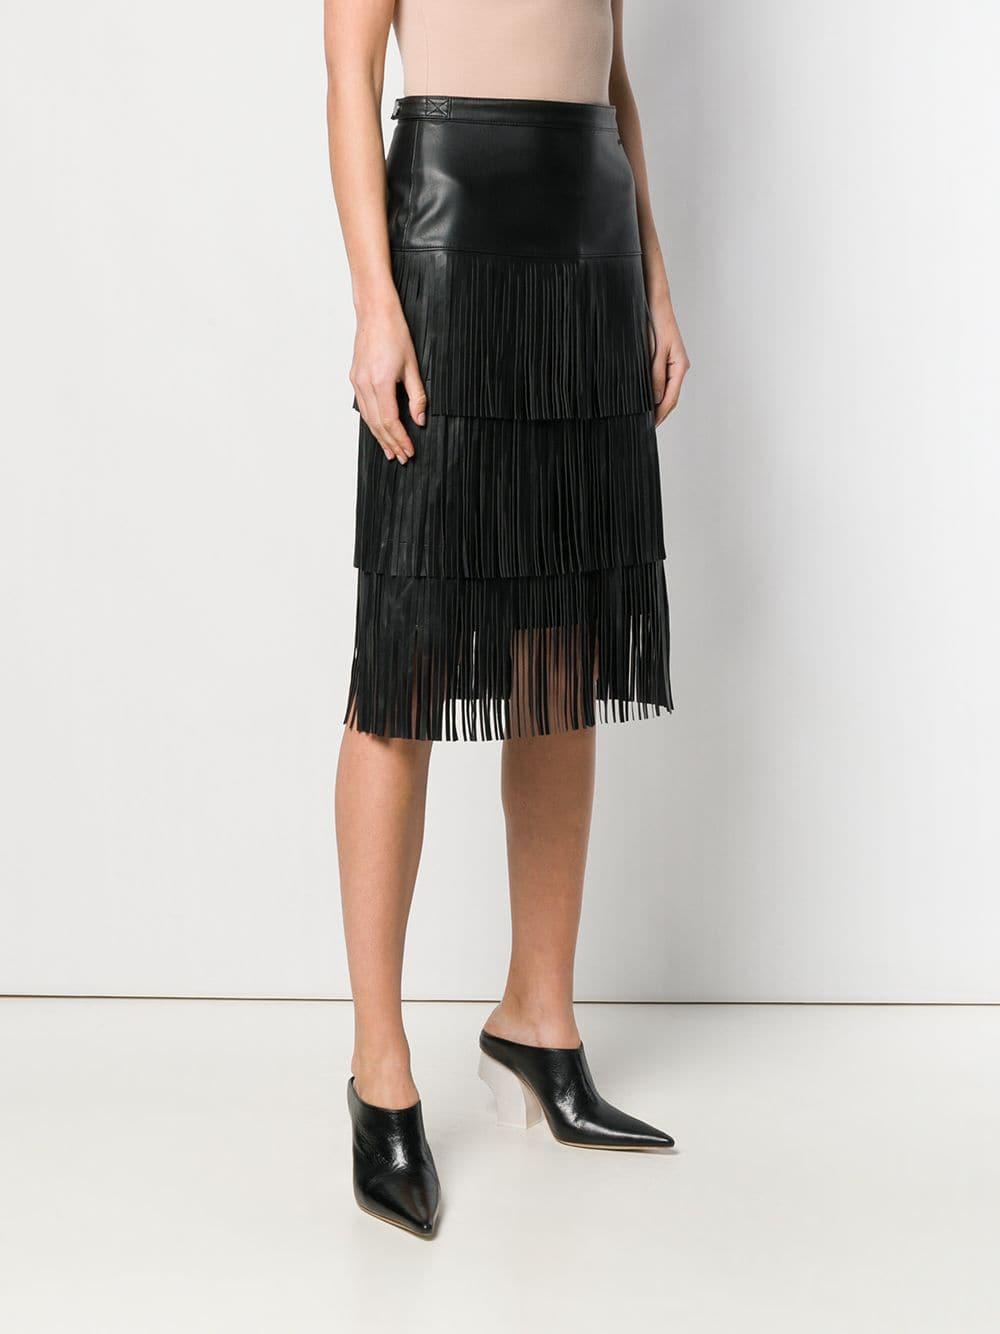 Karl Lagerfeld Fringed Leather Skirt in Black - Lyst